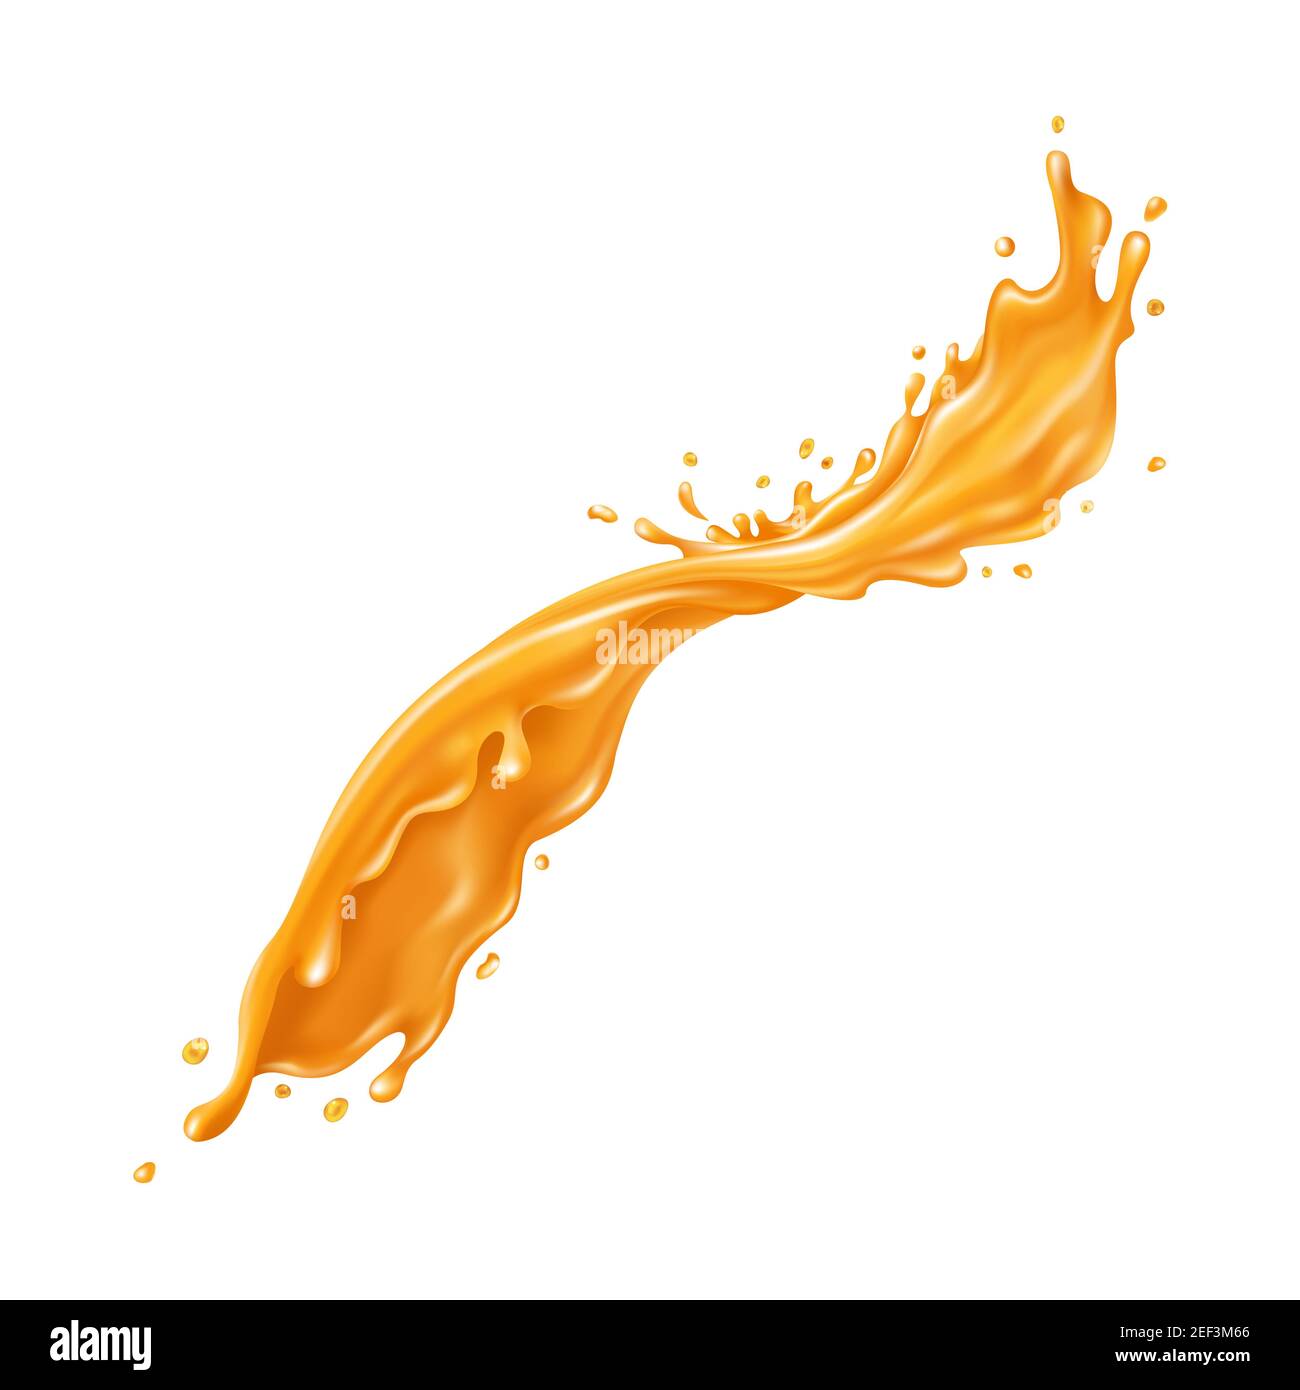 Orange liquid splash on a white background Stock Photo